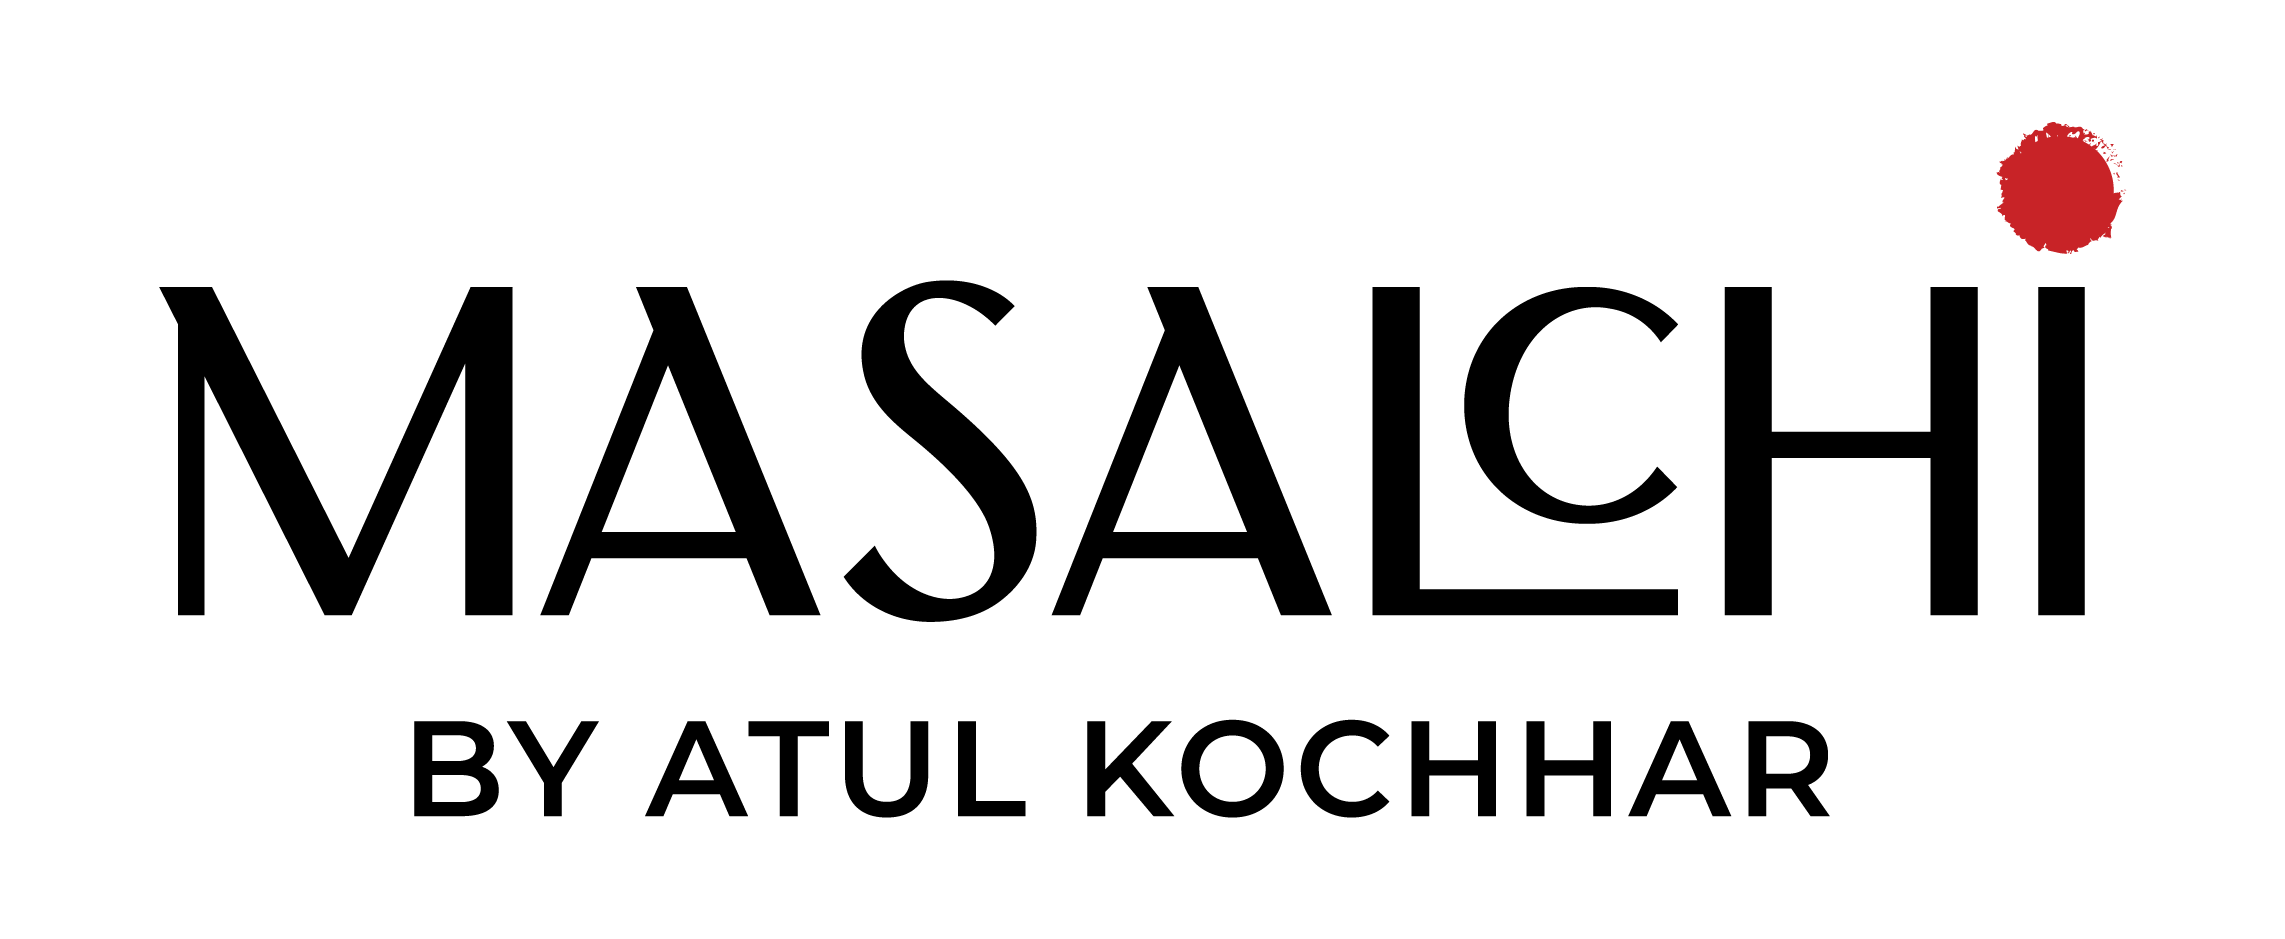 Masalchi_Black & White Logo_Atul Kochhar.png